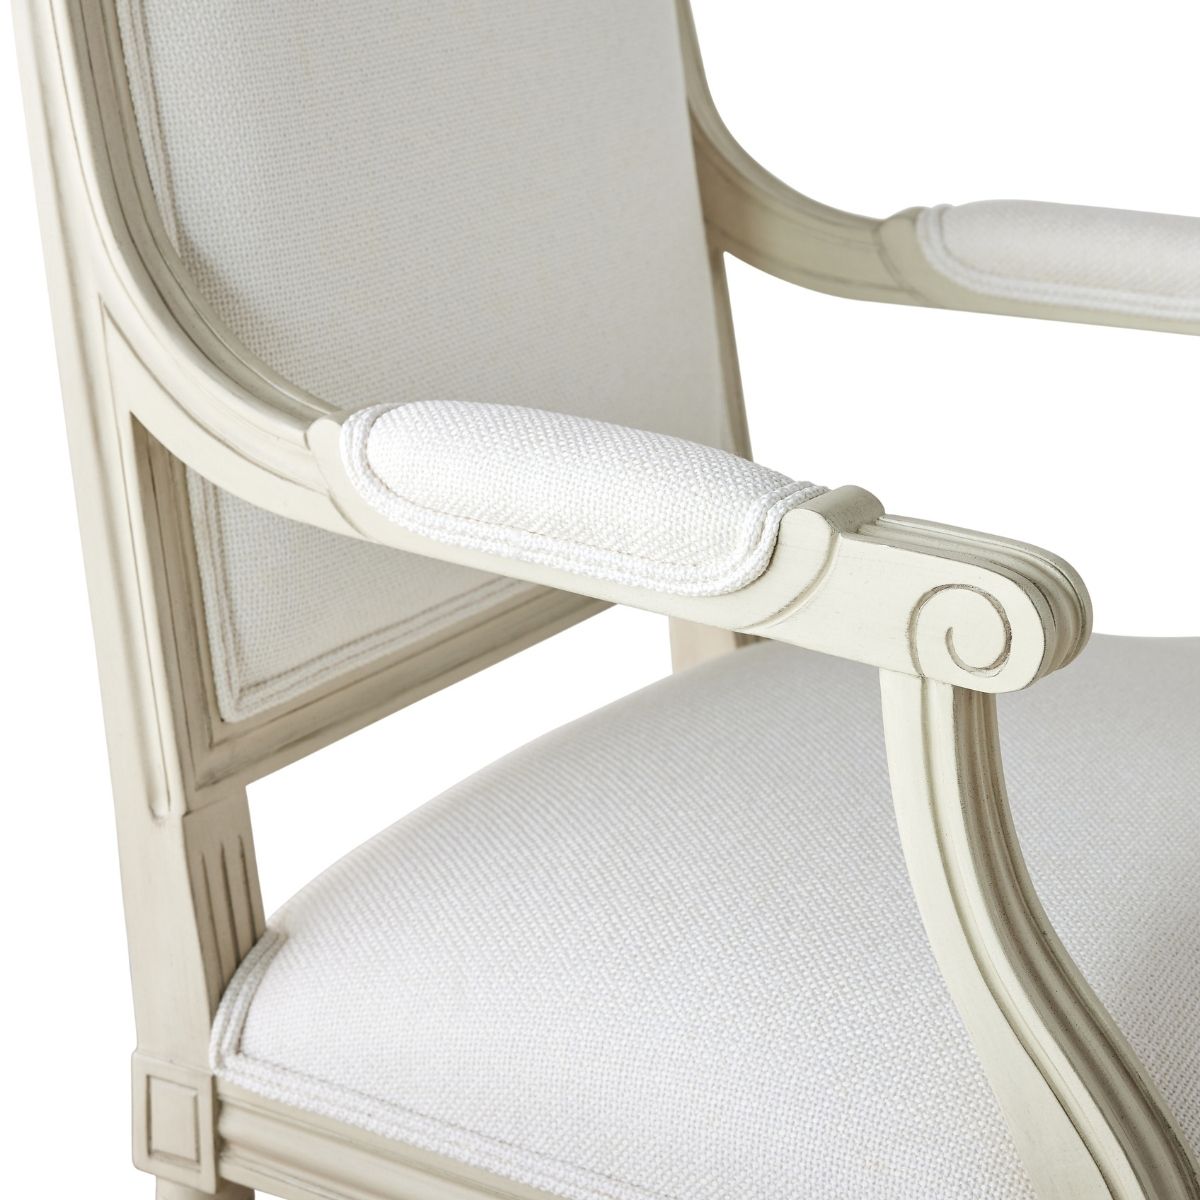 Genevieve Arm Chair in Cream